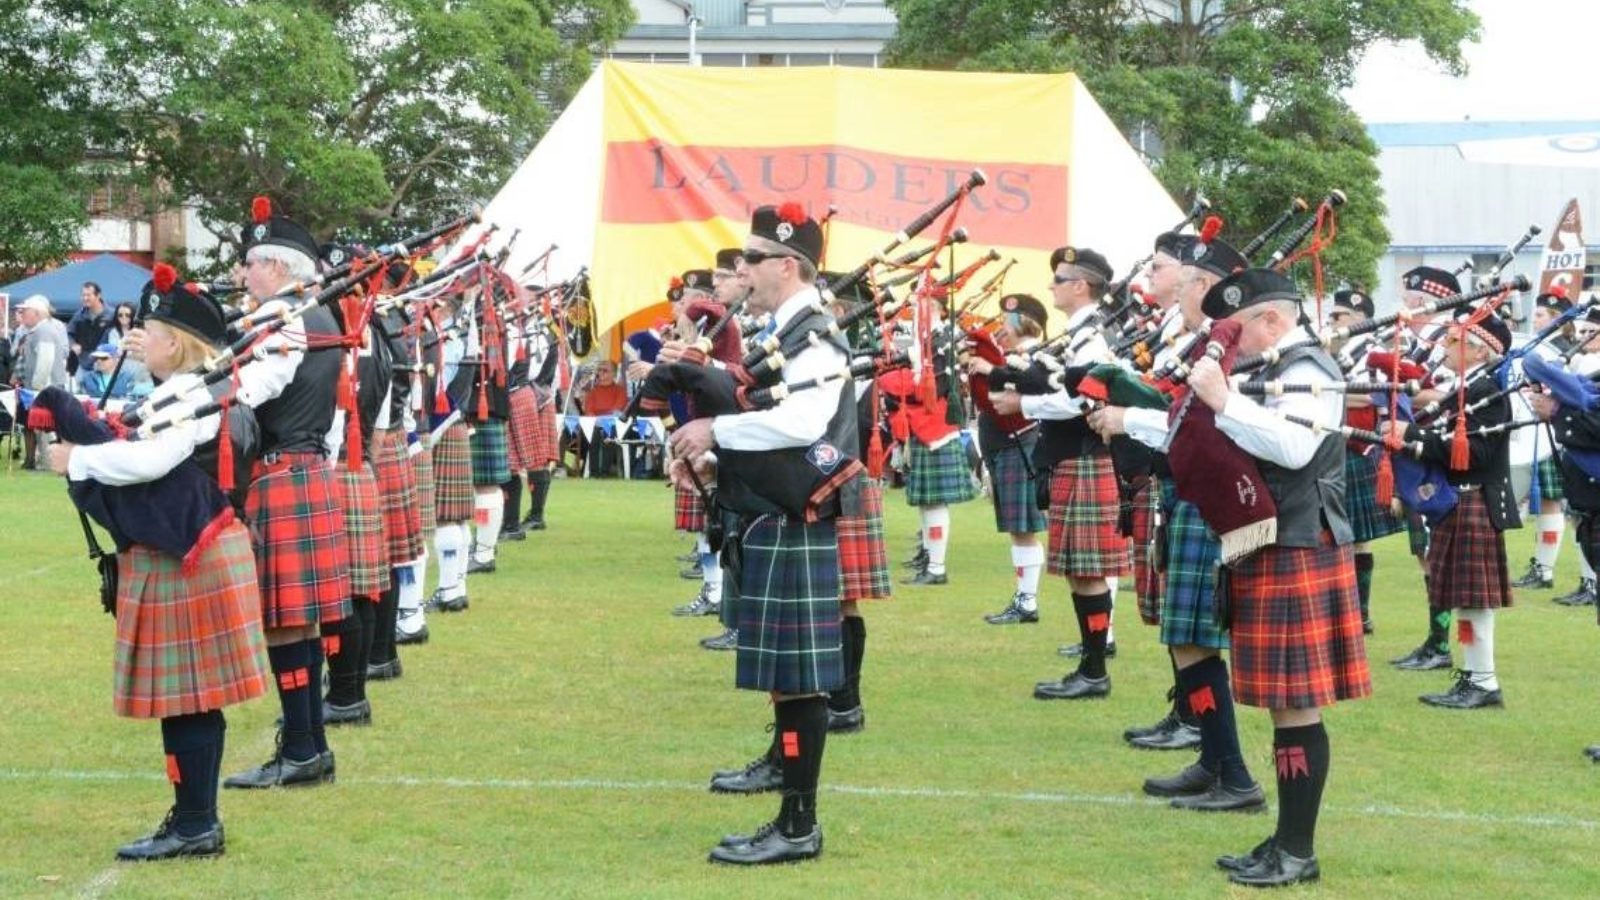 Bonnie Wingham Scottish Festival